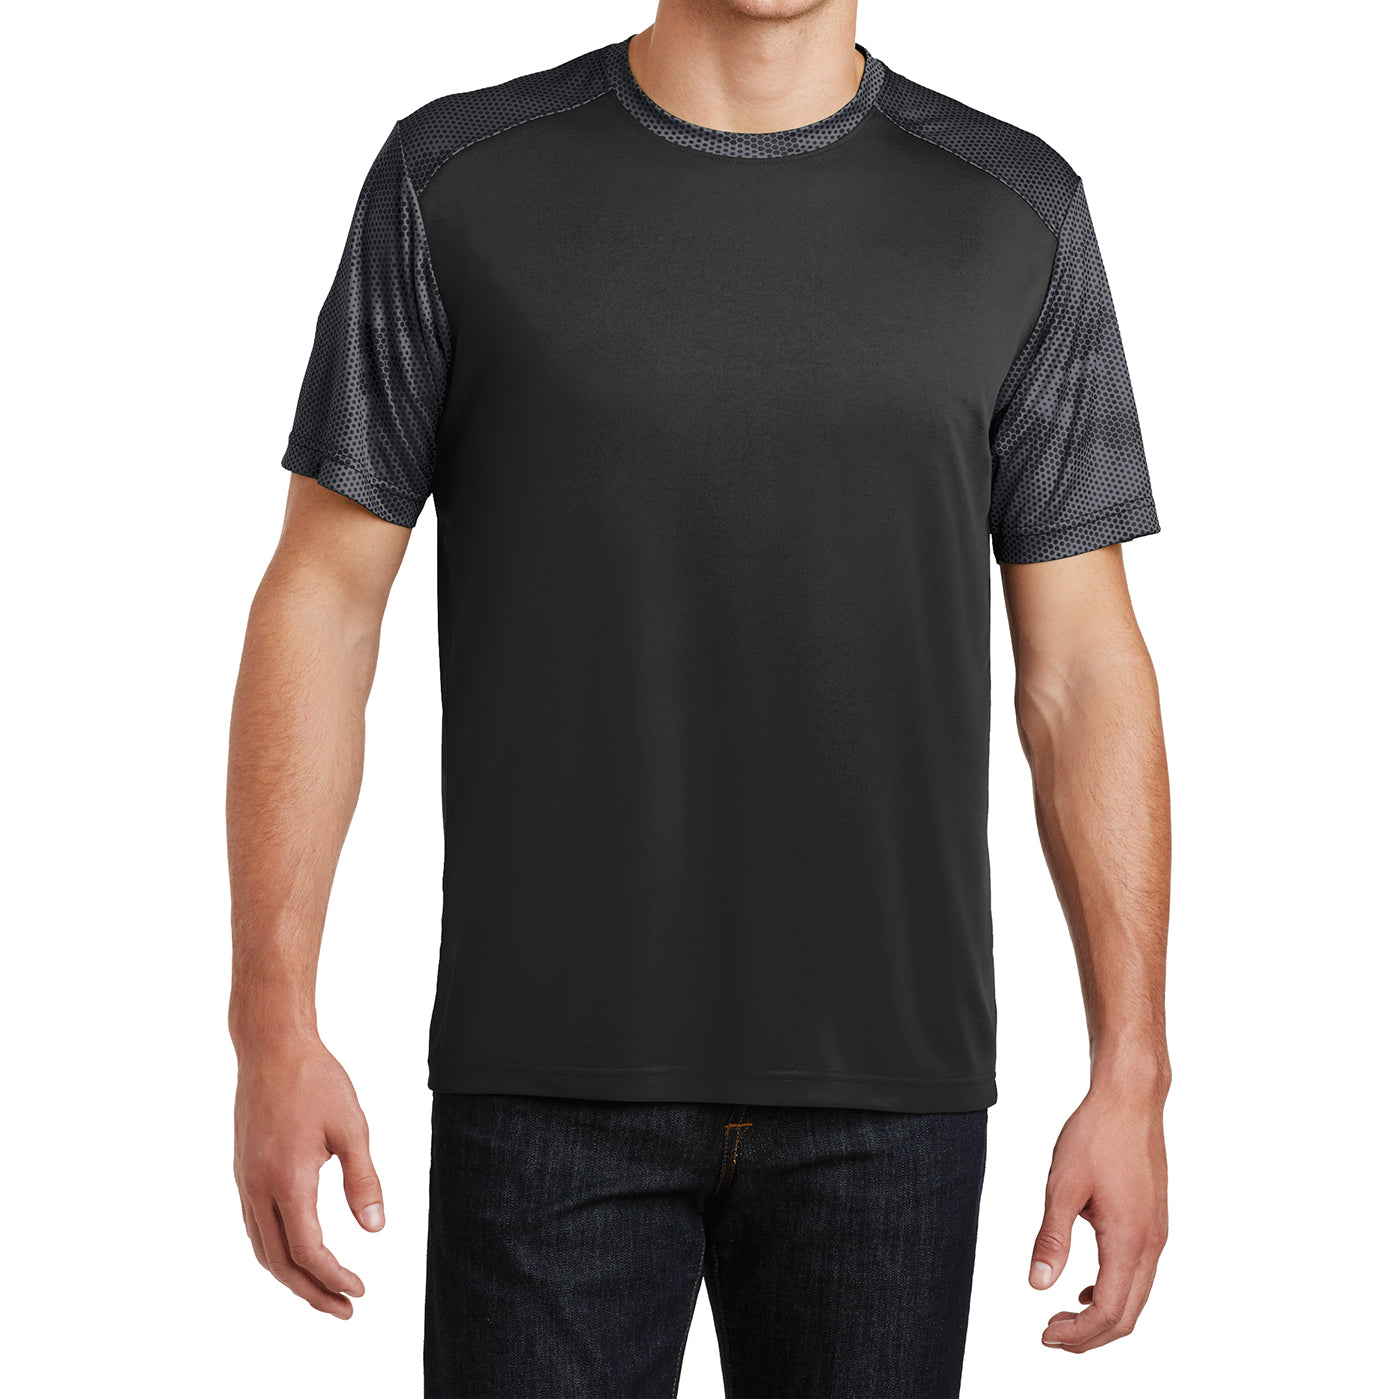 Men's CamoHex Colorblock Tee Shirt Black/ Iron Grey Front